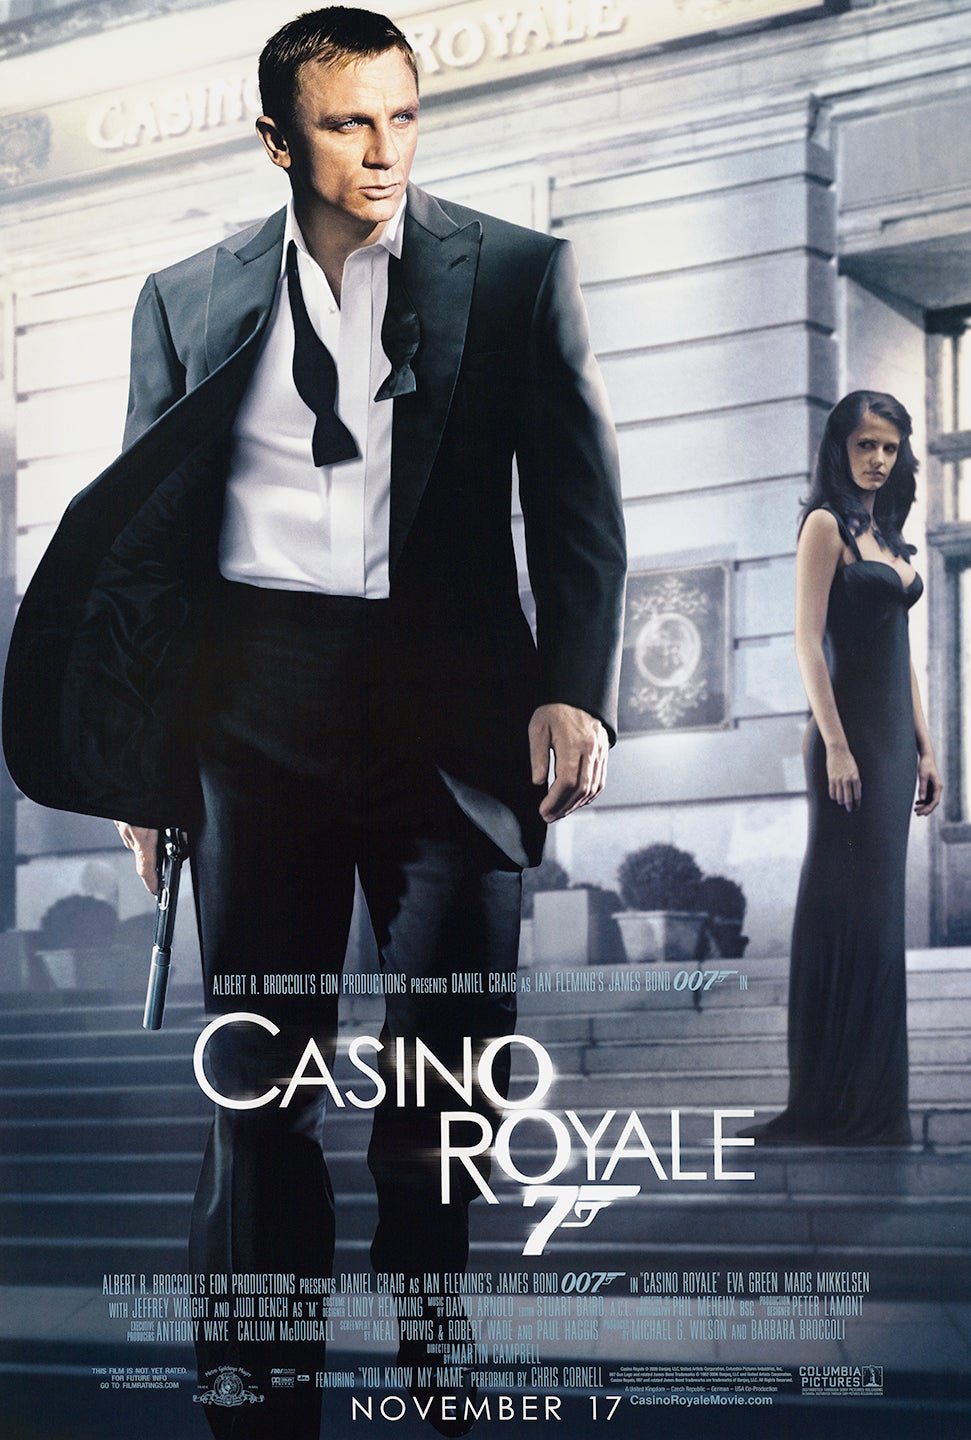 The Official James Bond 007 Website | Bond Posters